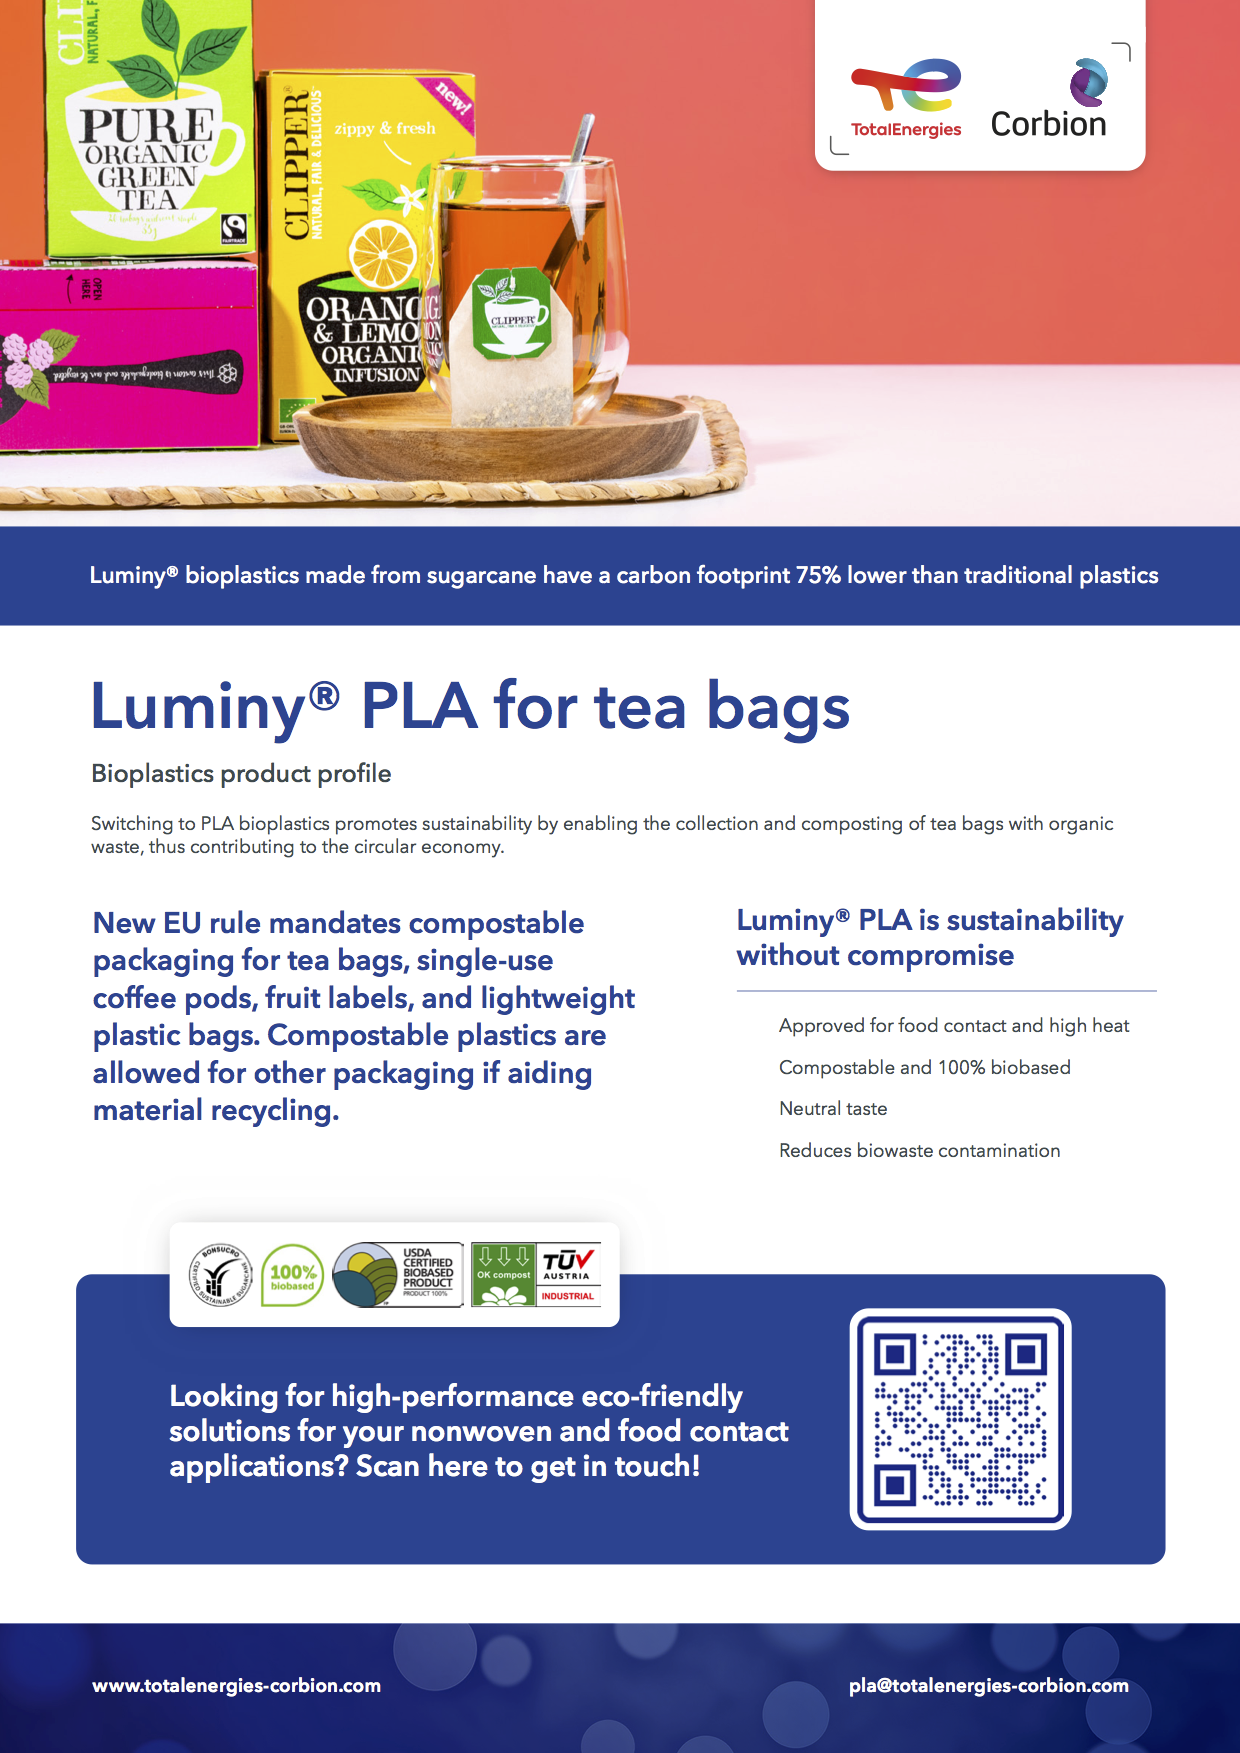 Luminy PLA for Tea bags